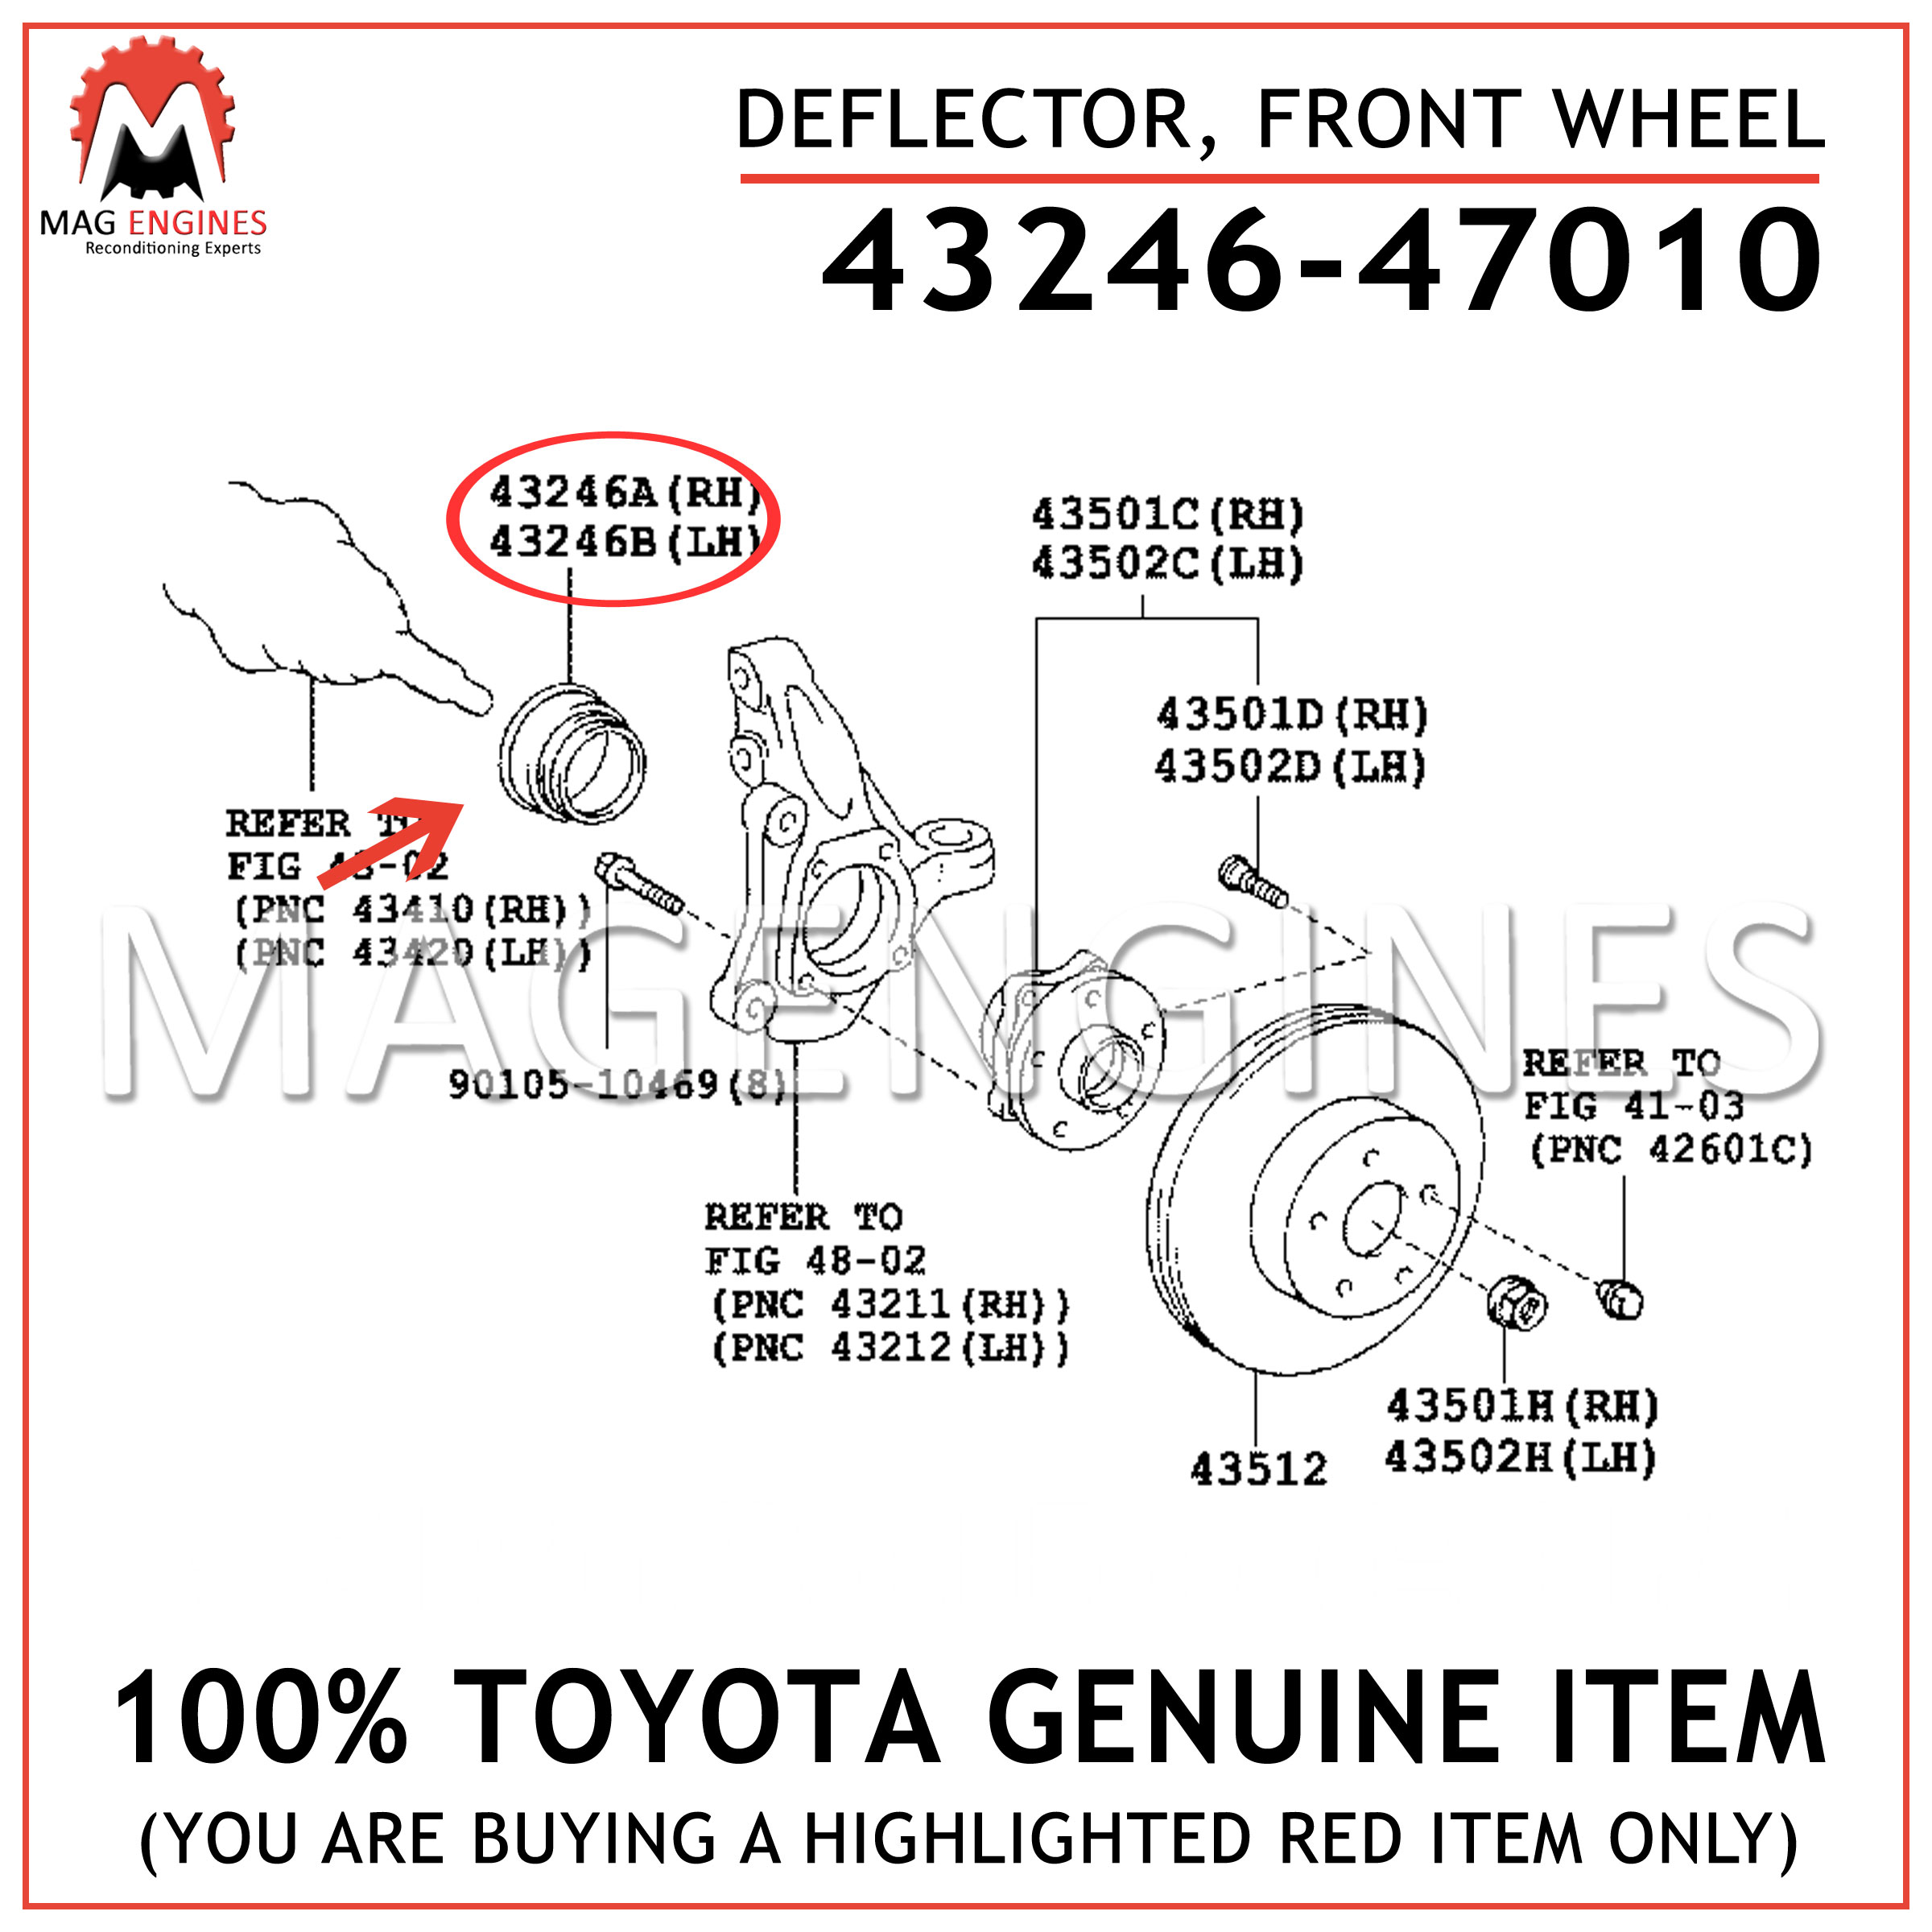 FRONT WHEEL BEARING DUST 4324648011 Genuine Toyota DEFLECTOR RH/LH NO.1 